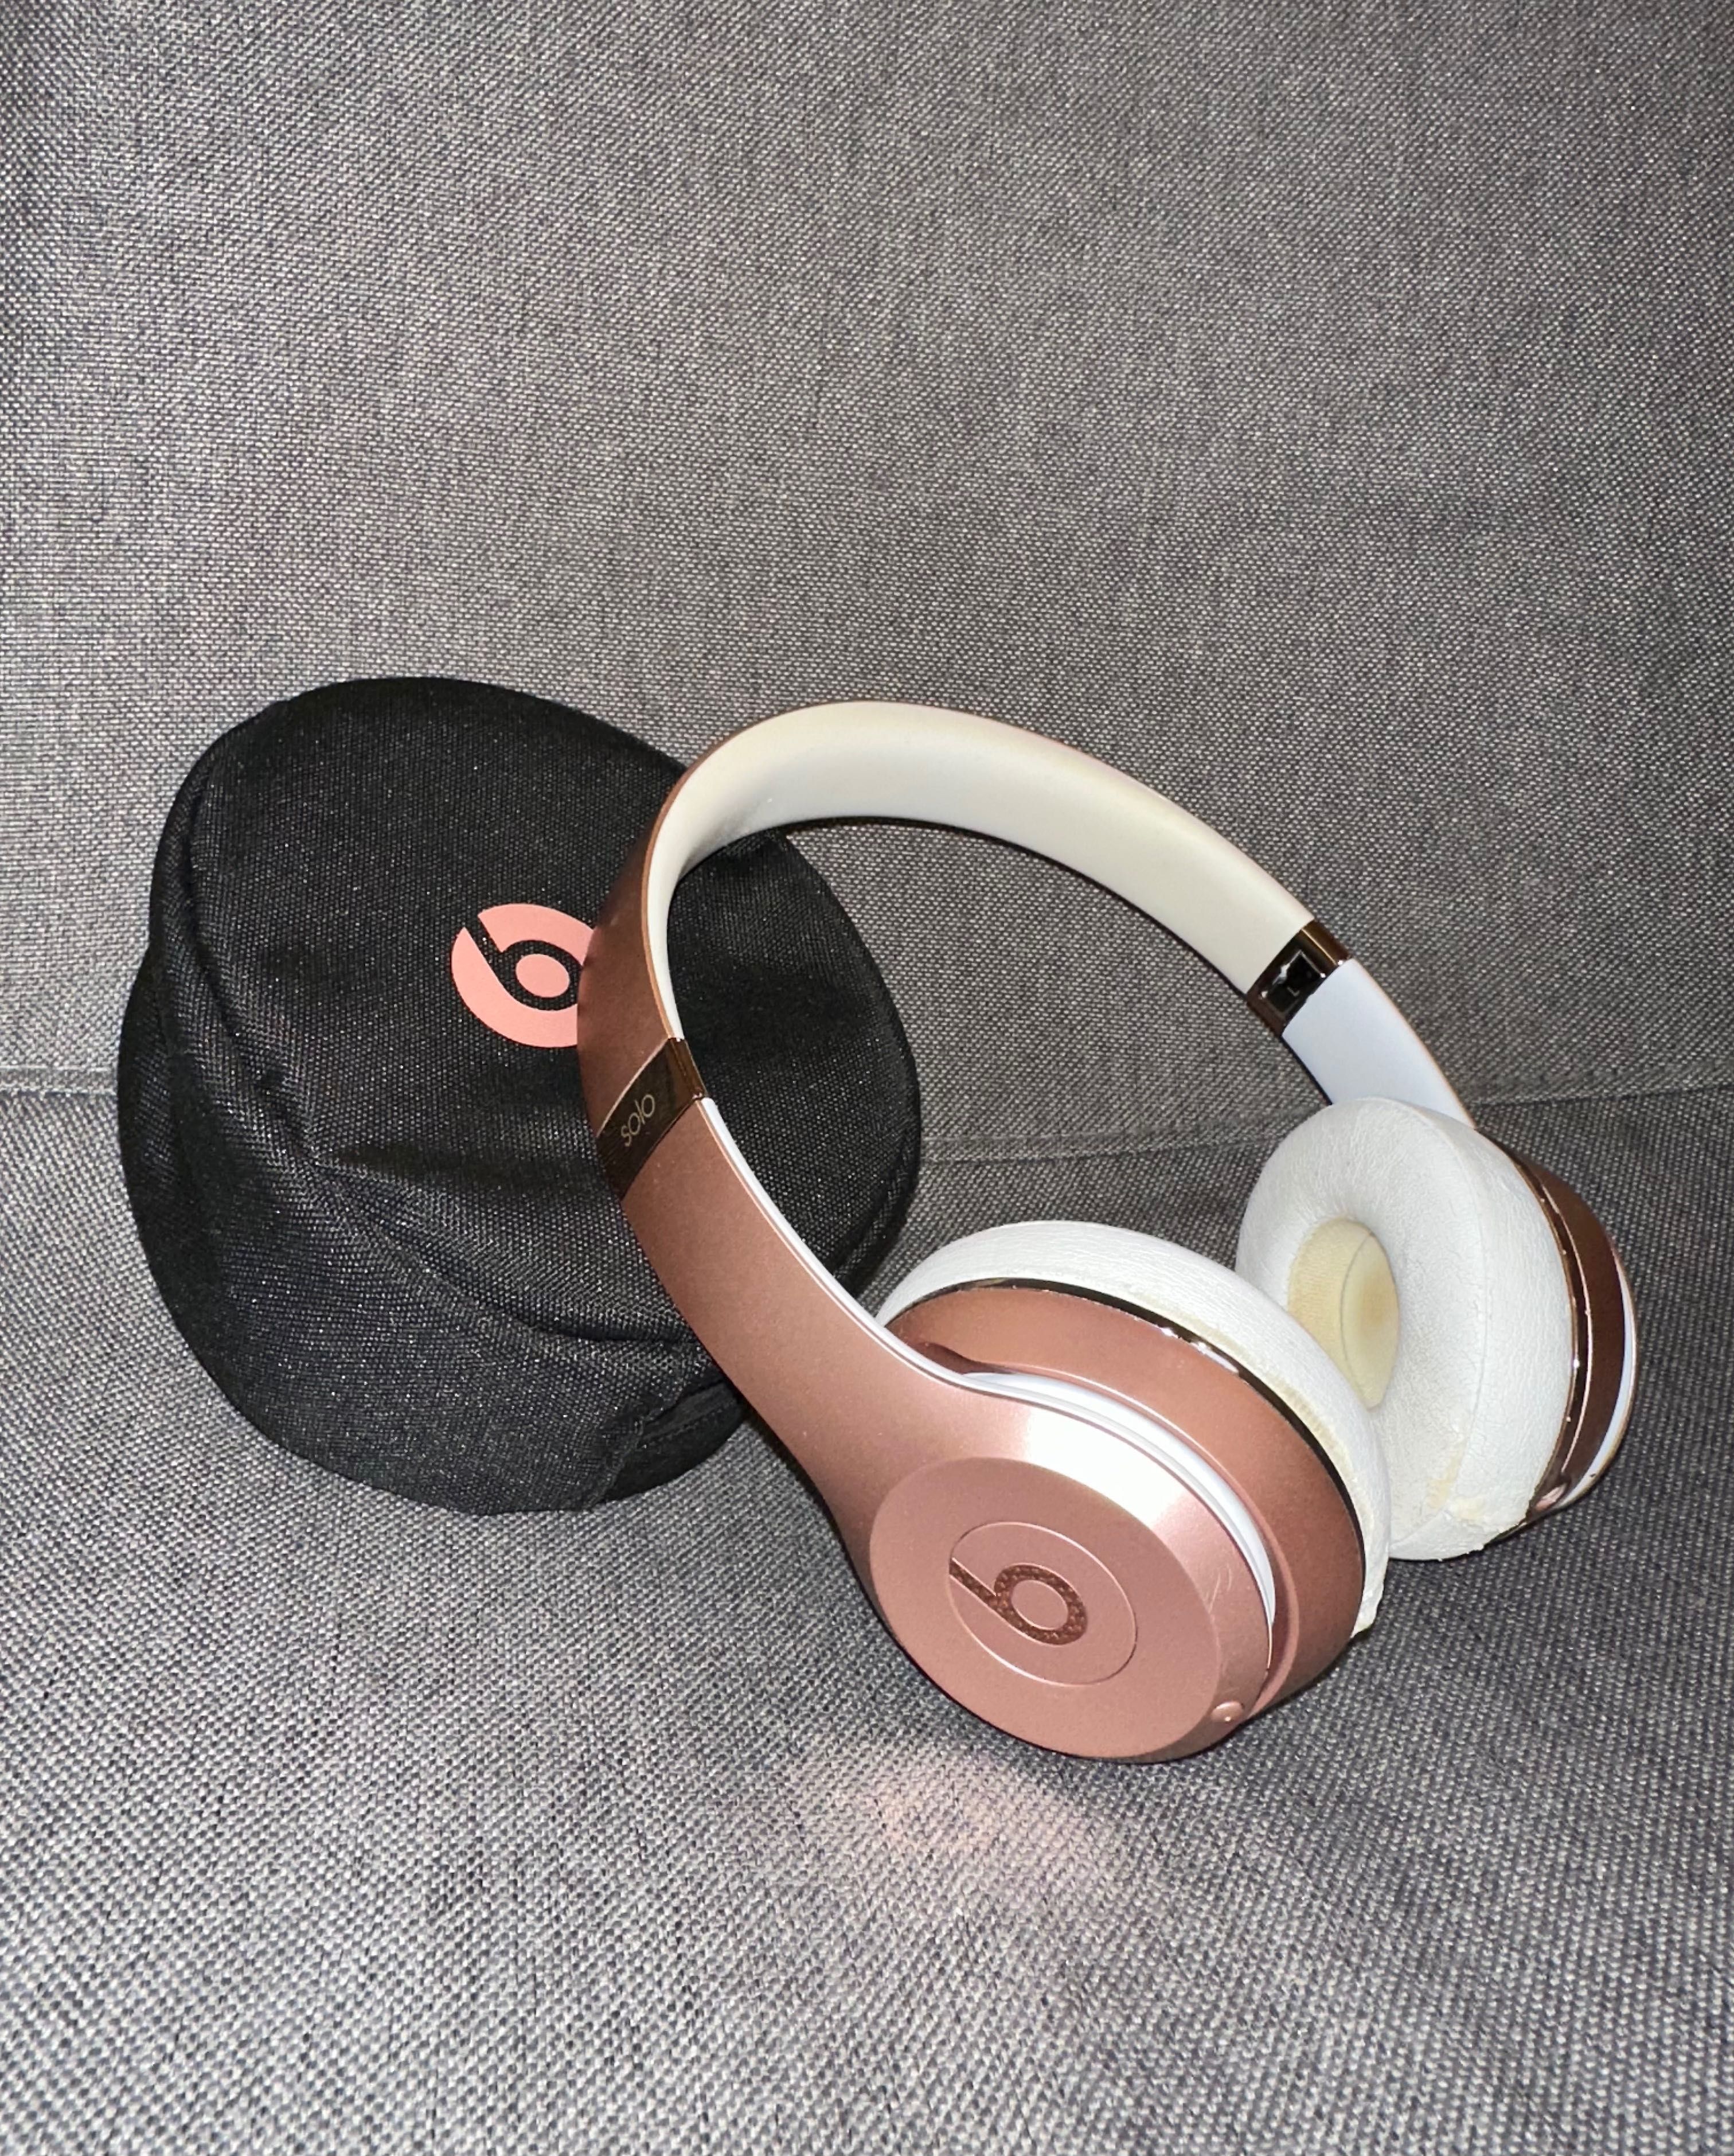 Beats Solo 3 Wireless Headphones - Rose Gold